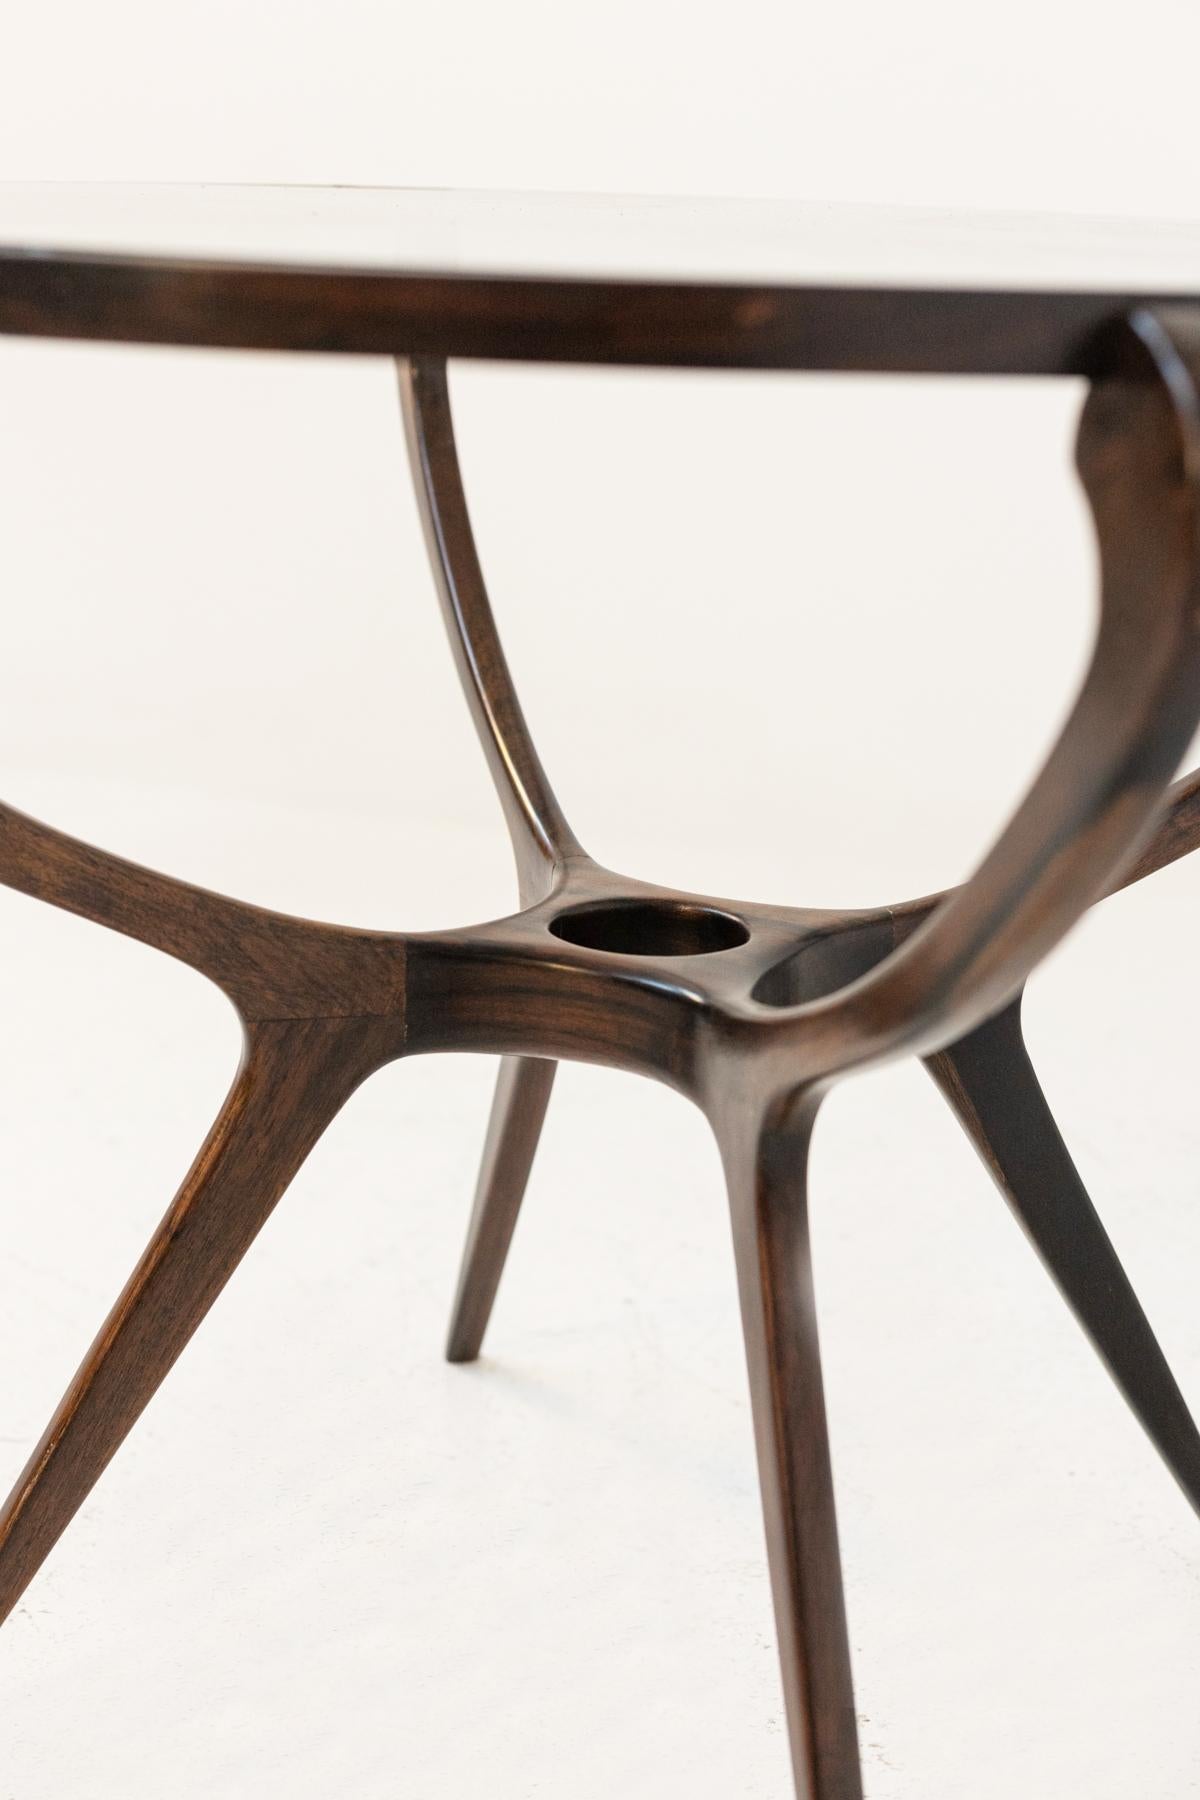 Italian Splendid Side Table in Precious Wood by Giuseppe Scapinelli